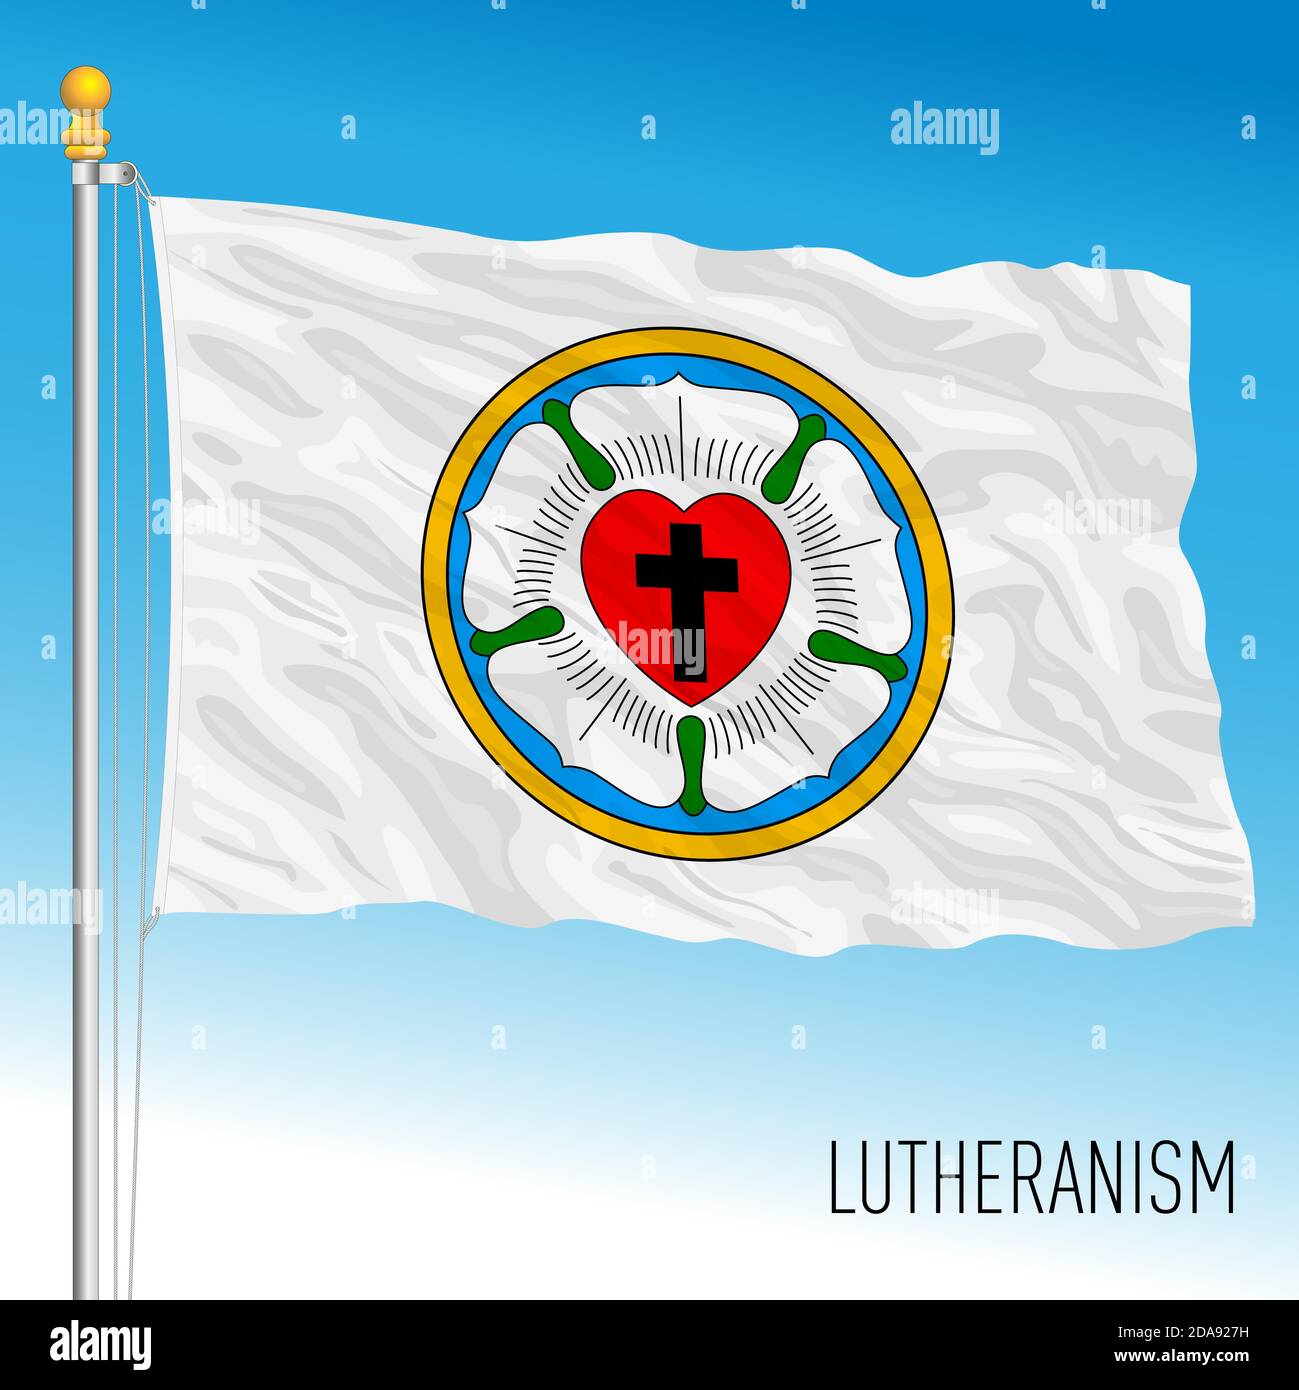 Lutheranism international flag symbol, vector illustration Stock Vector